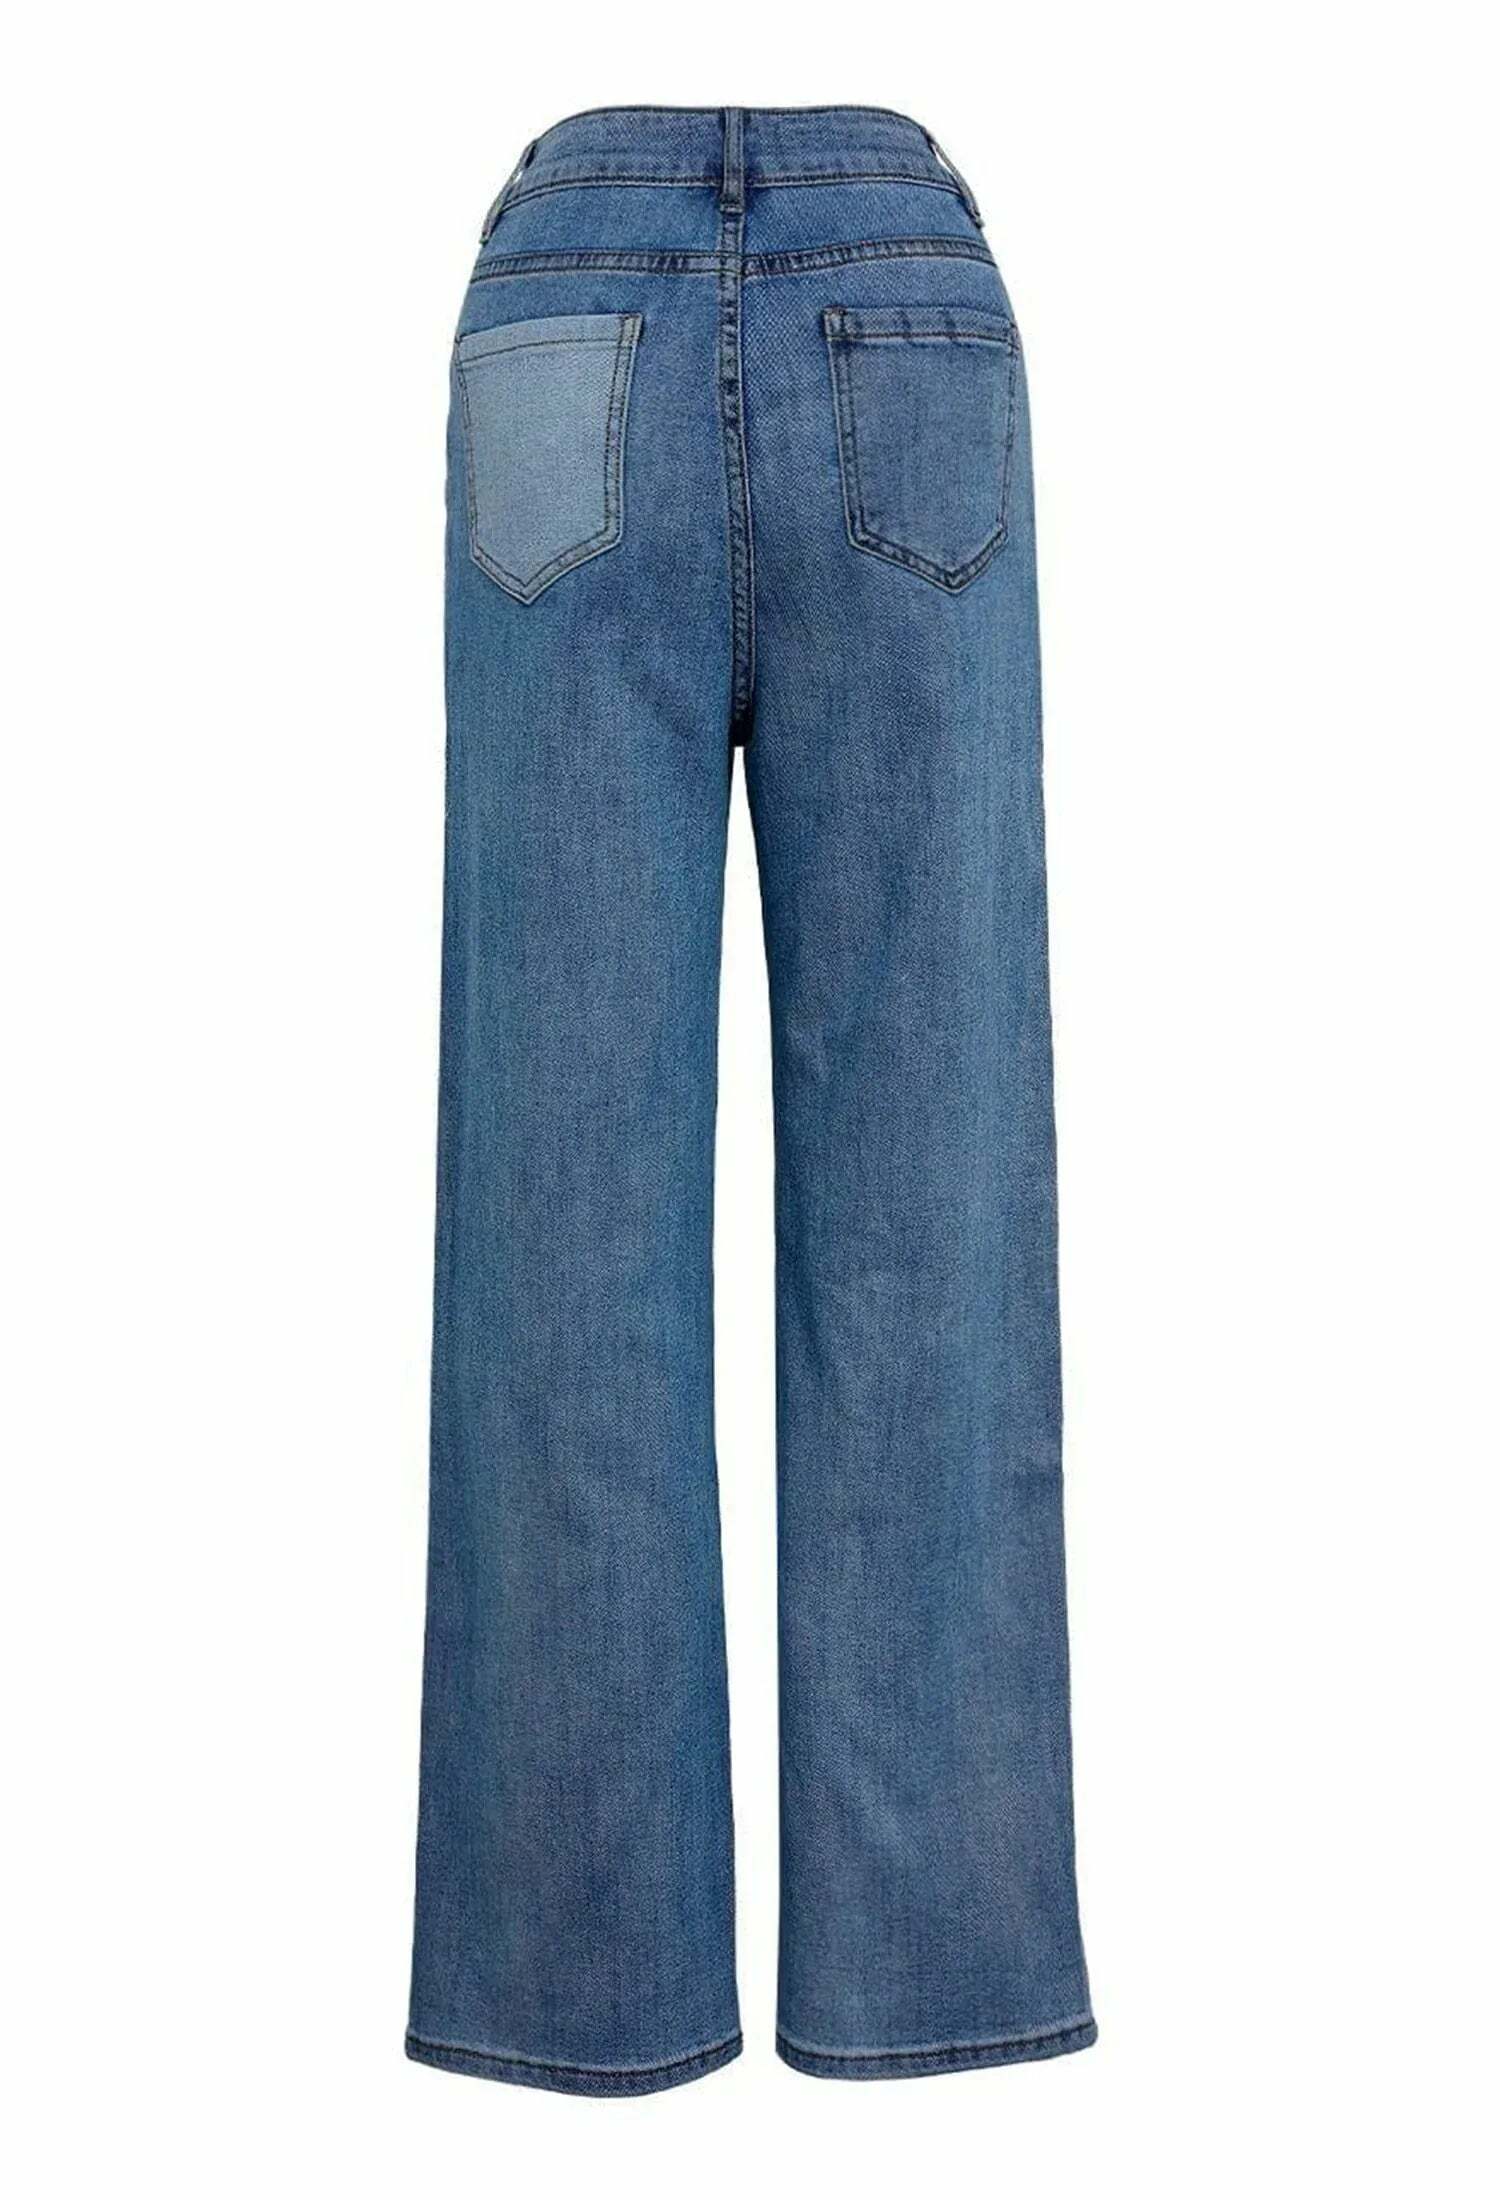 revolutionary patchwork jeans edgy & sleek streetwear 2758